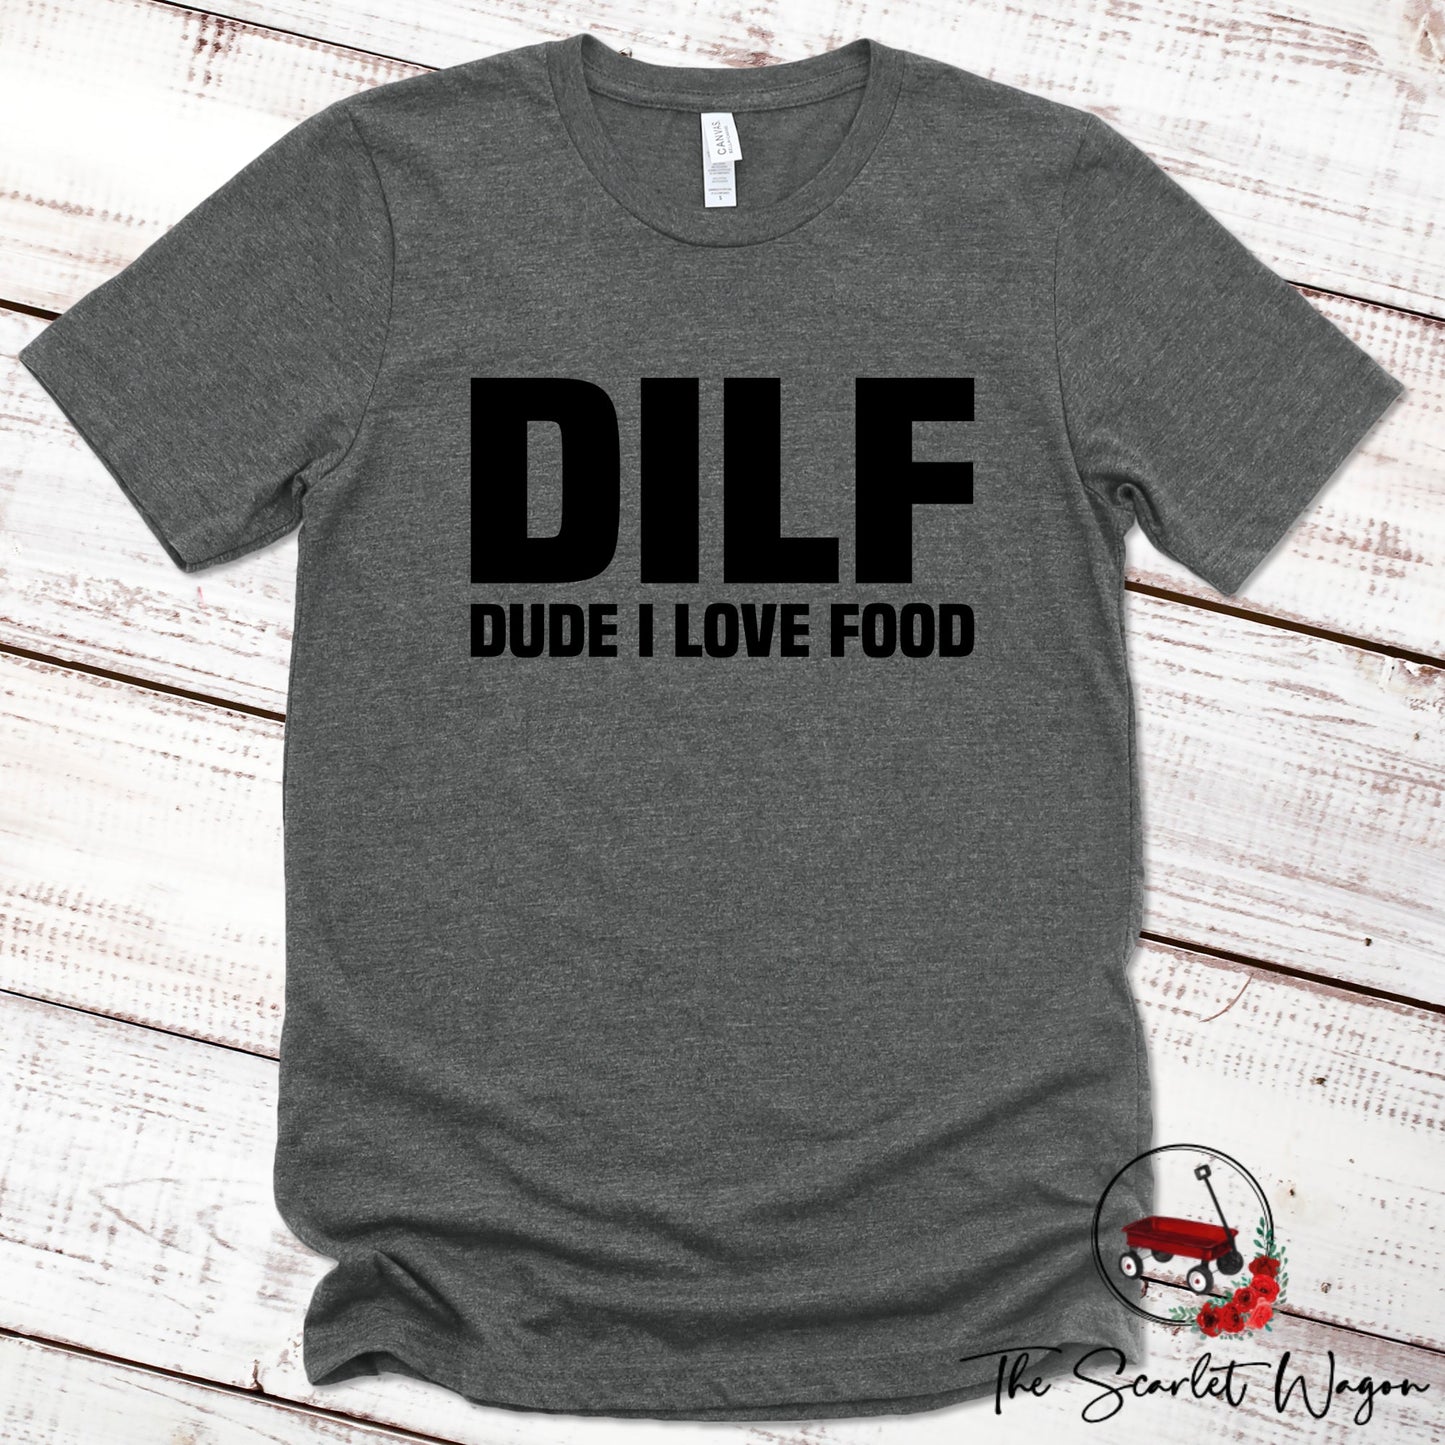 DILF - Dude I Love Food Premium Tee Scarlet Wagon Deep Heather Gray XS 